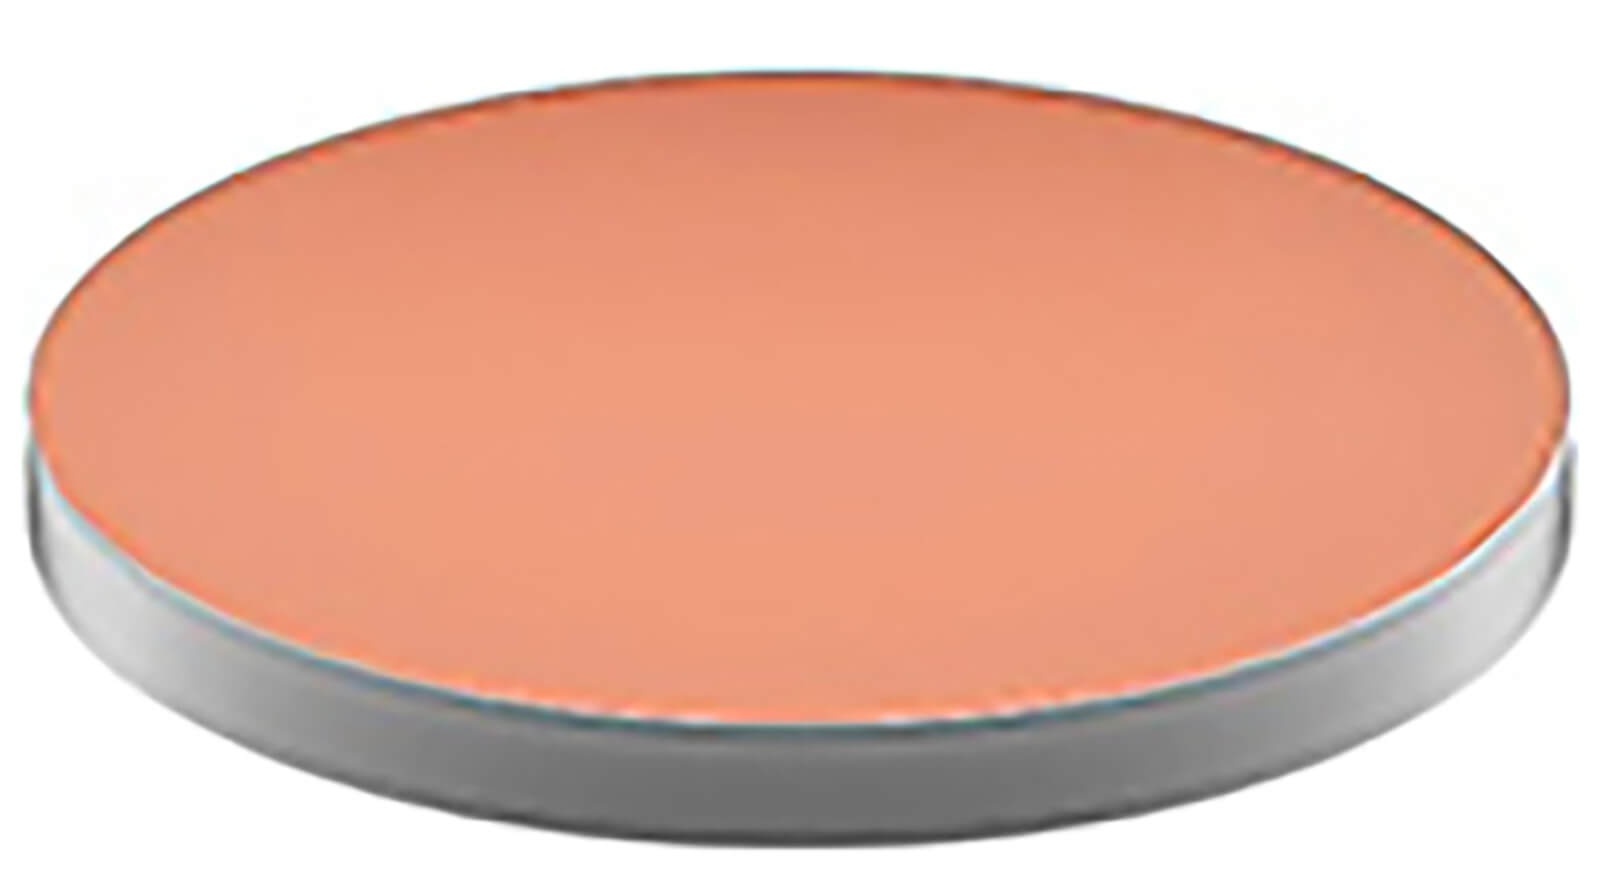 MAC Cream Colour Base / Pro Palette Refill Pan